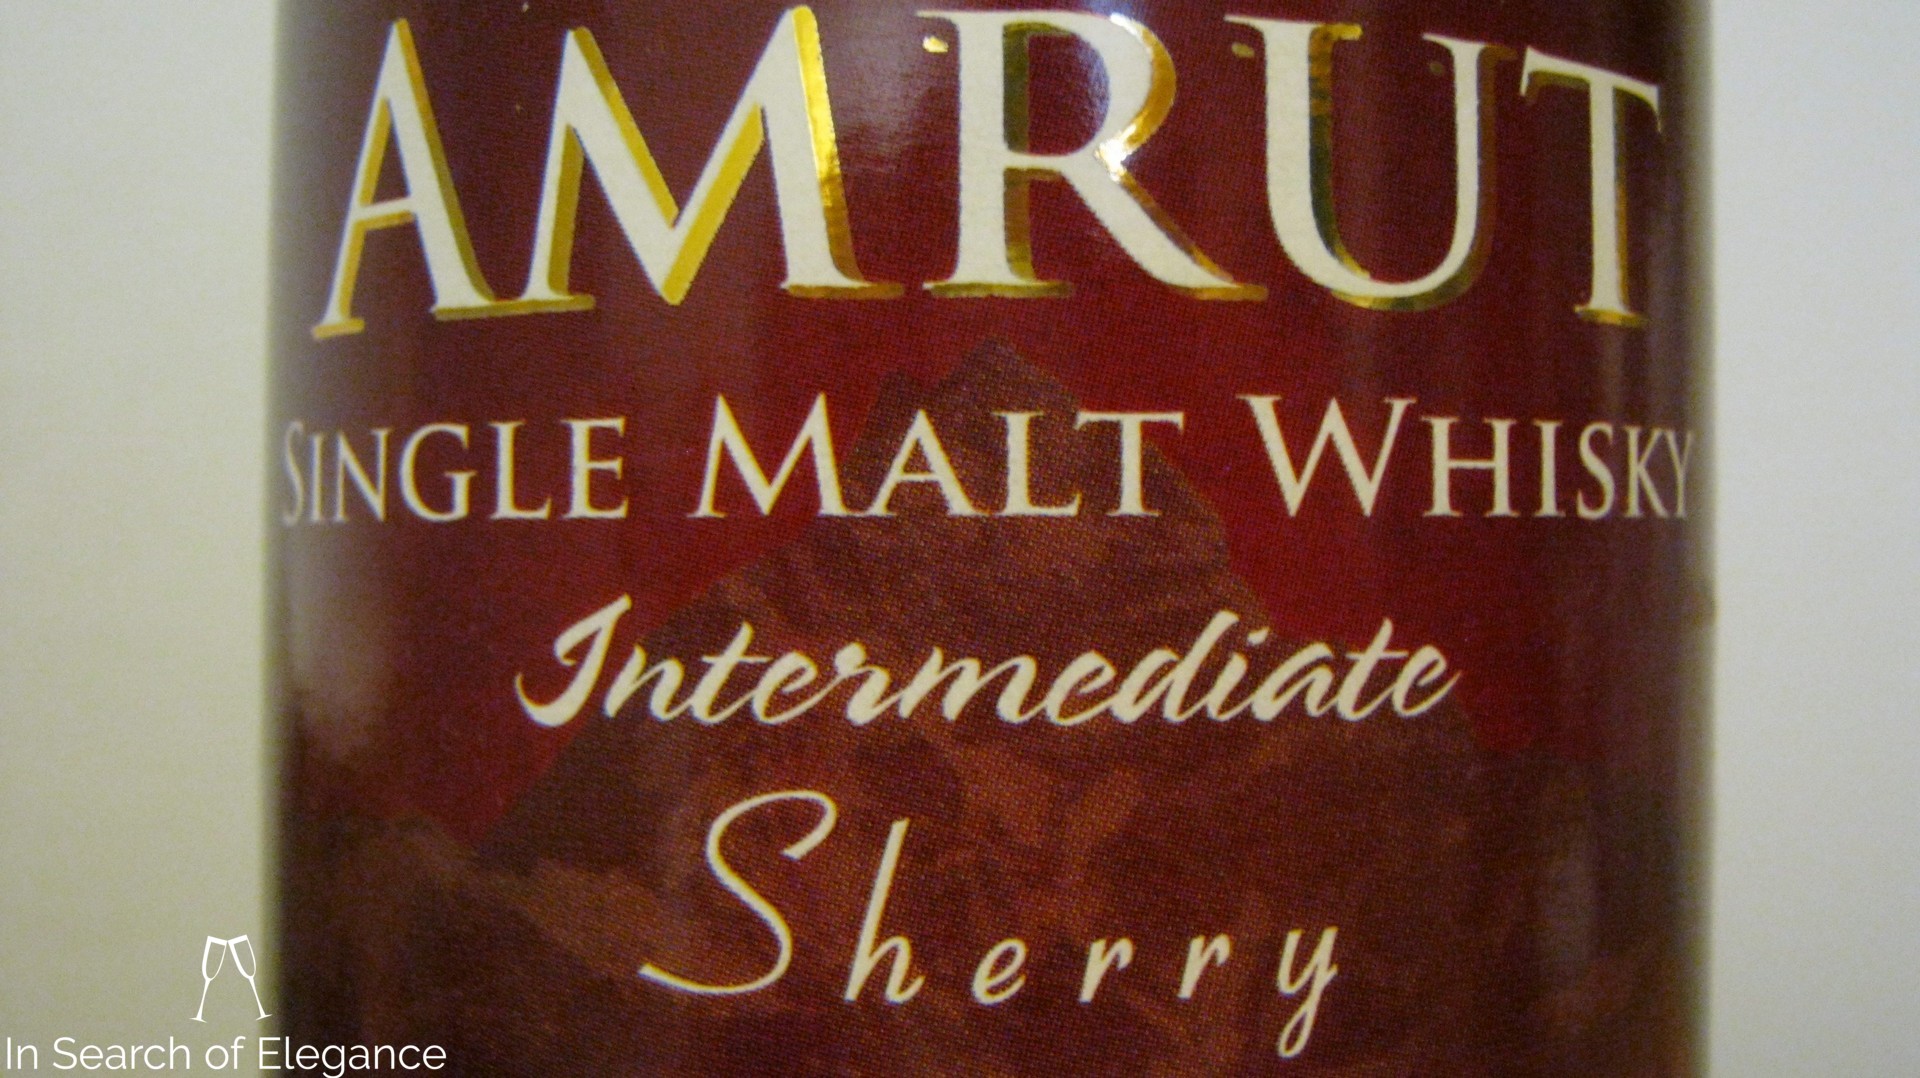 Amrut Intermediate Sherry 2.jpg